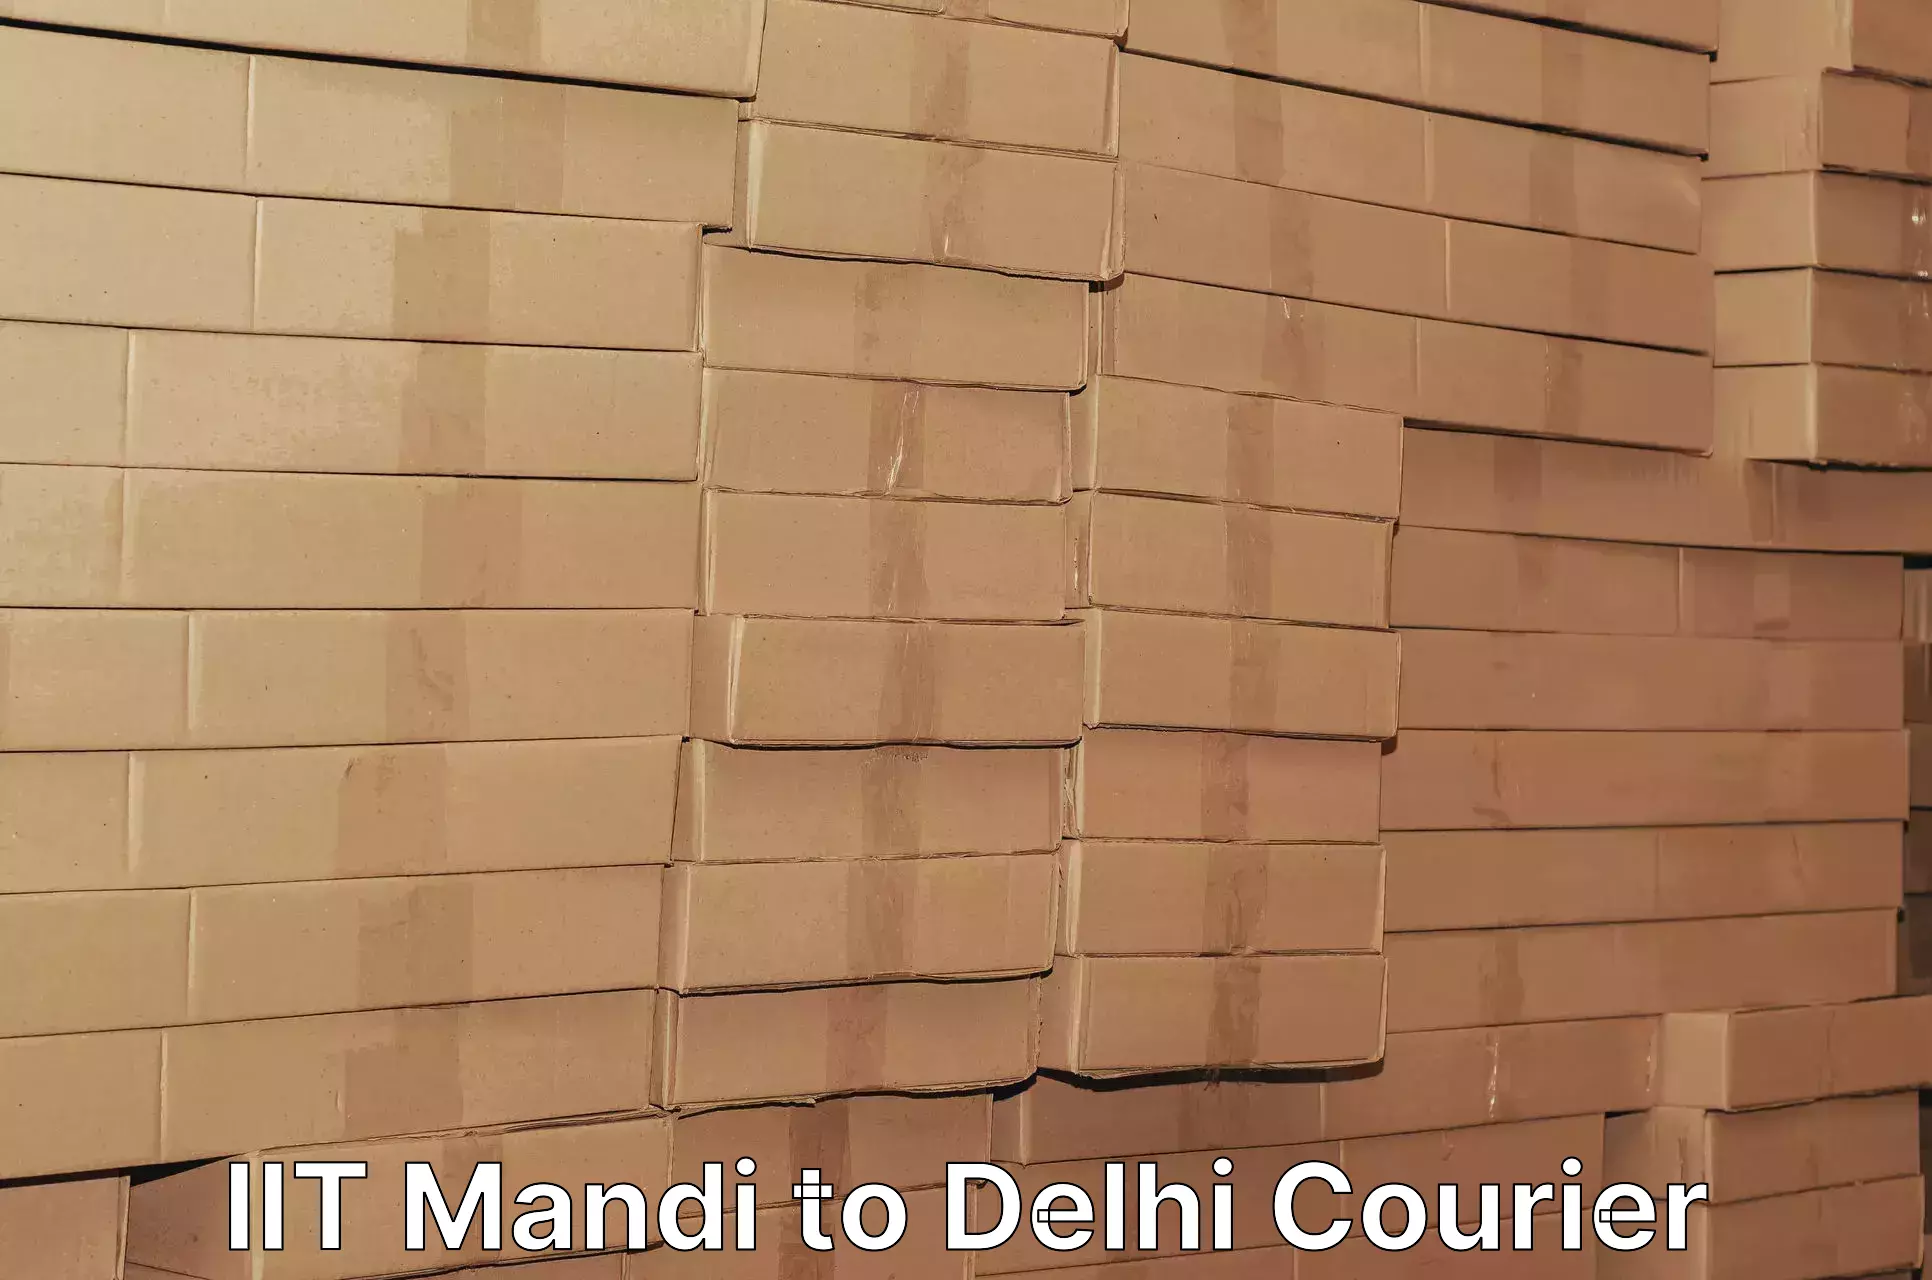 Ocean freight courier IIT Mandi to East Delhi